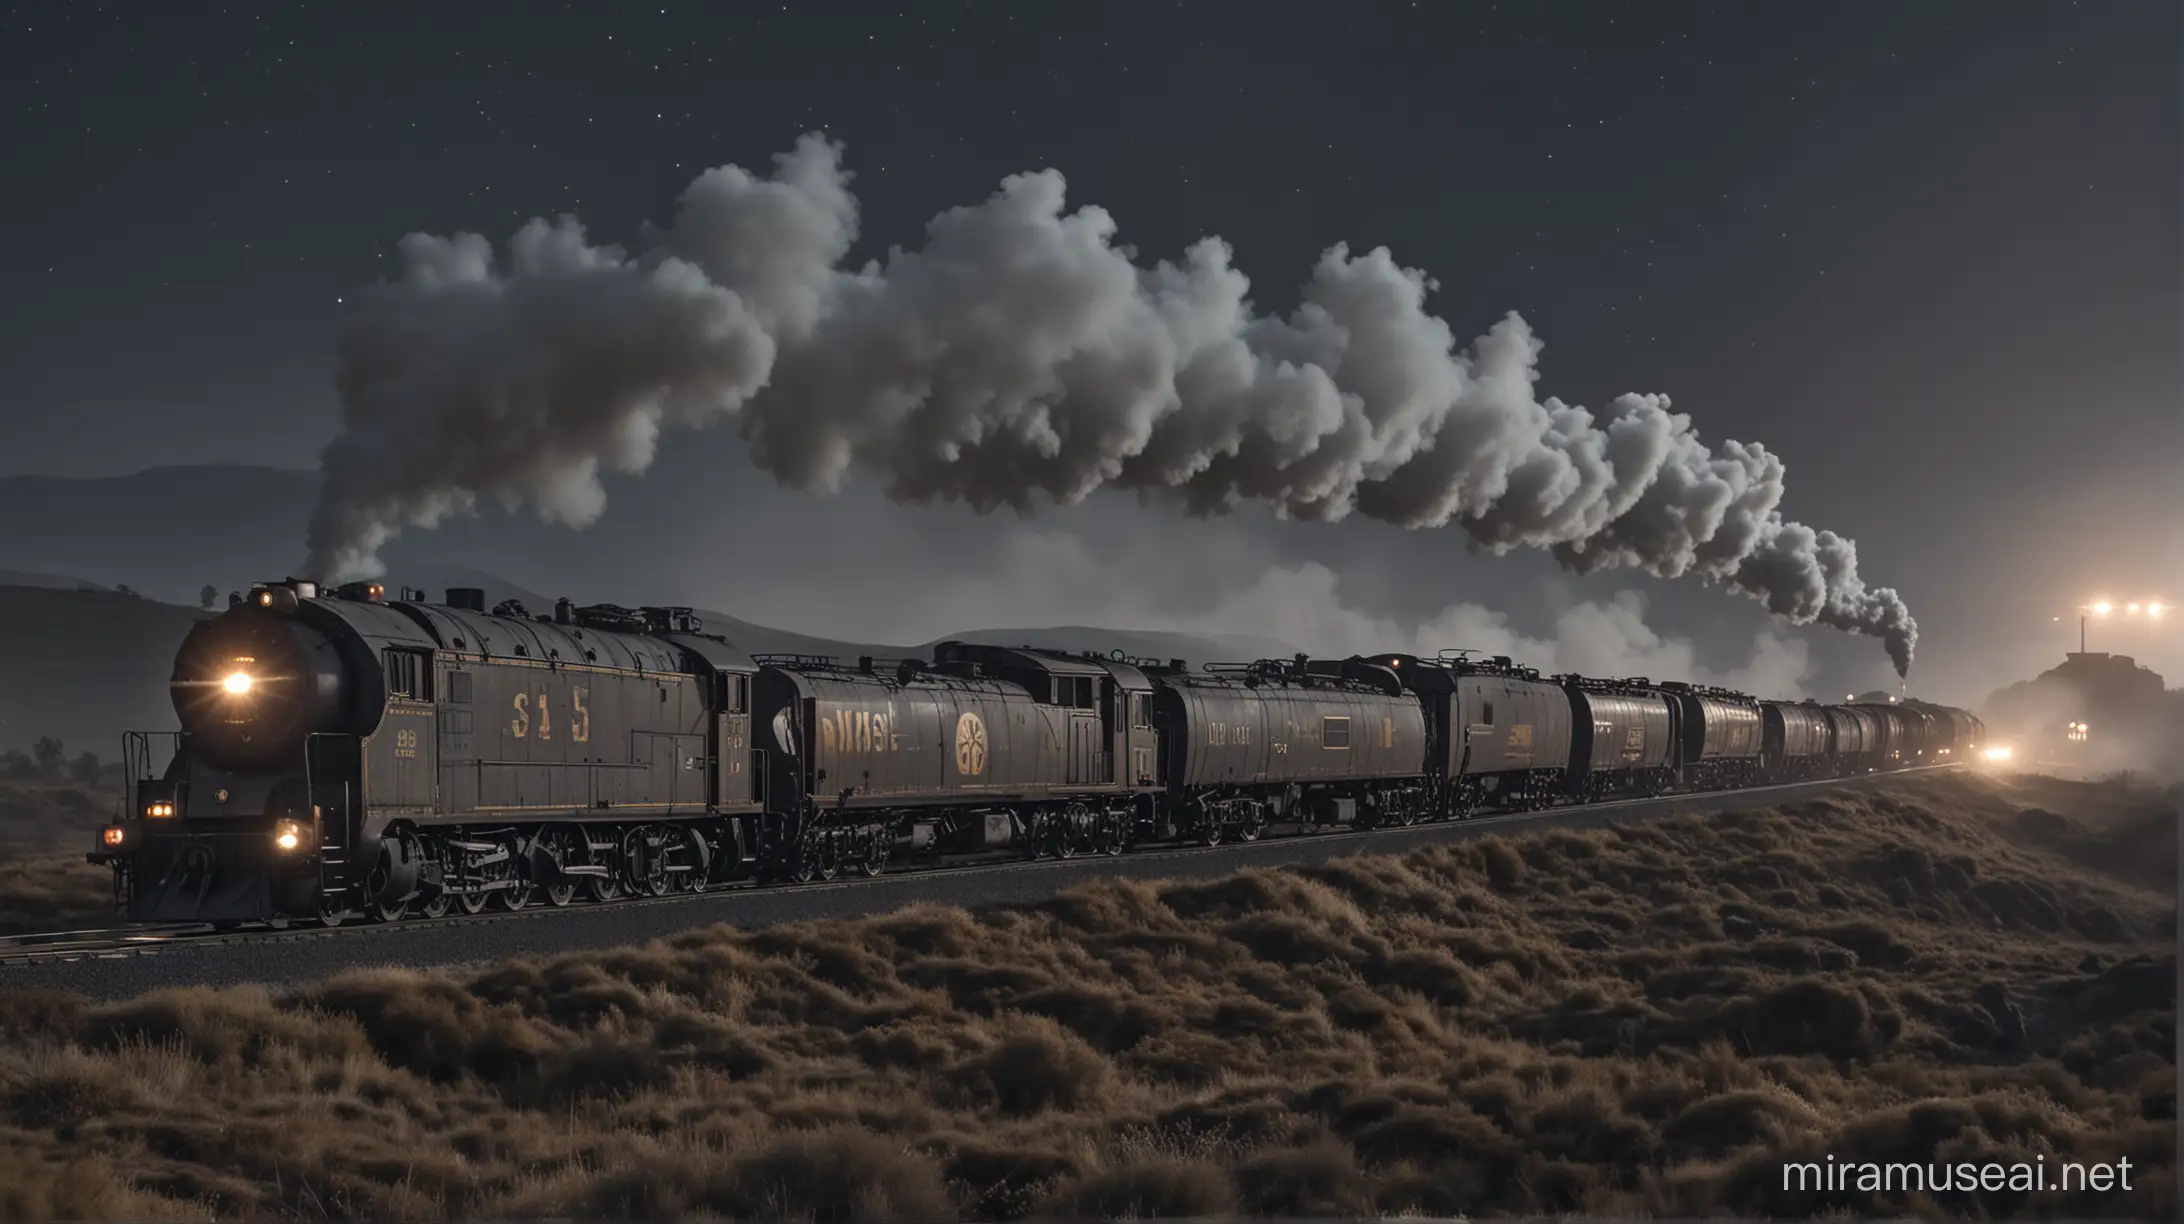 Majestic Steampunk Train Trio Chugging Through Twilight Terrain